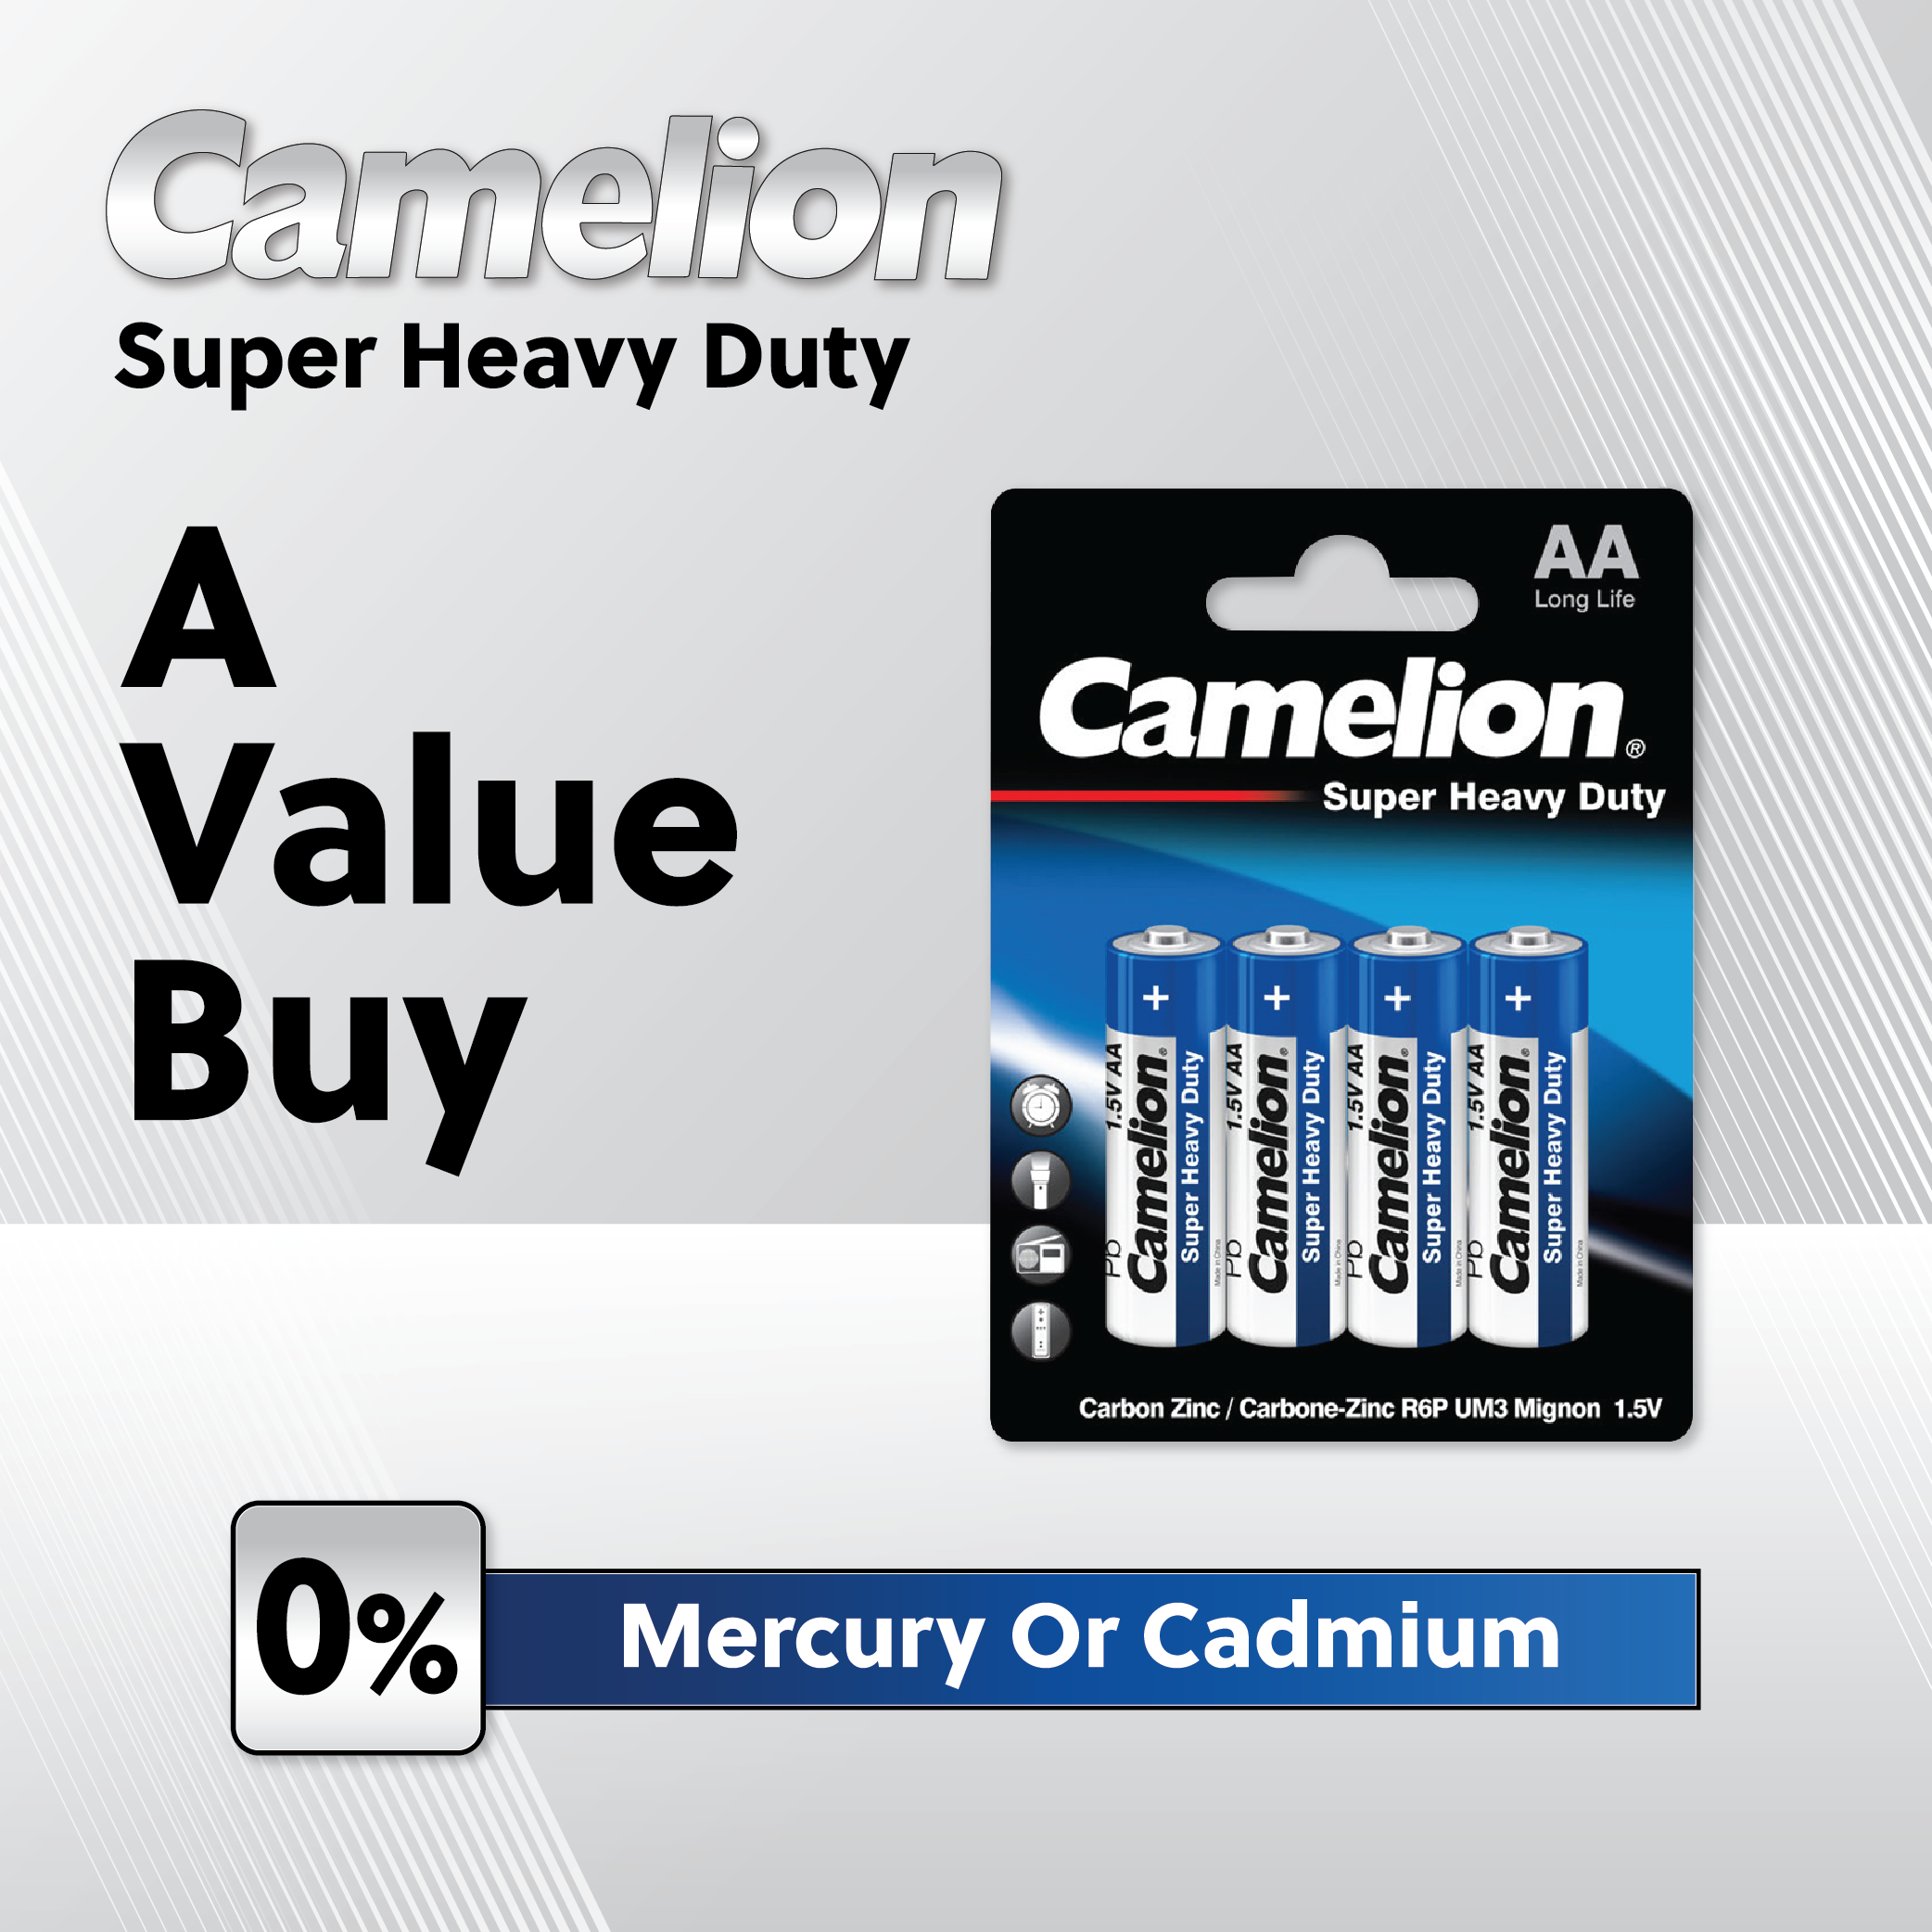 Camelion C Super Heavy Duty